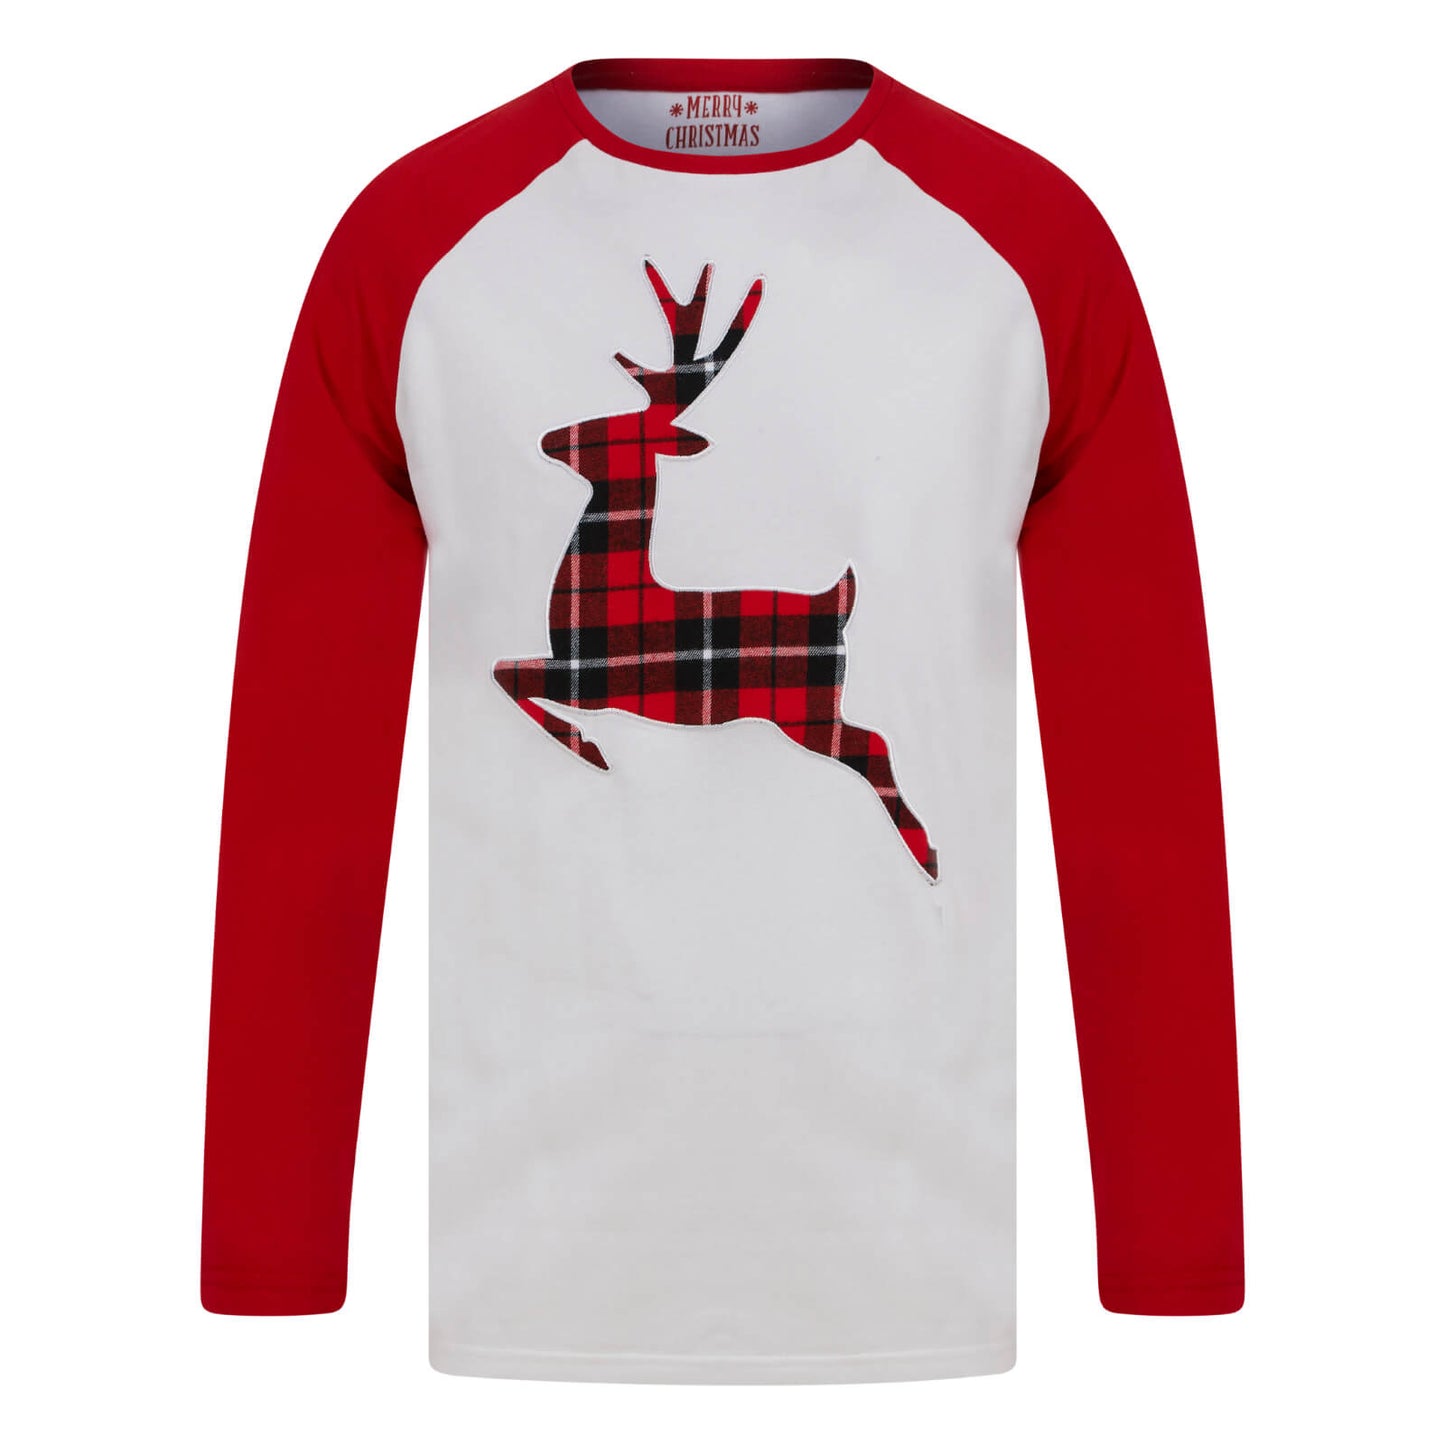 Mr Crimbo Mens Christmas Pyjama Set Reindeer/Stag Check Bottoms - MrCrimbo.co.uk -SRG1Q17454_A - Red/White -Black